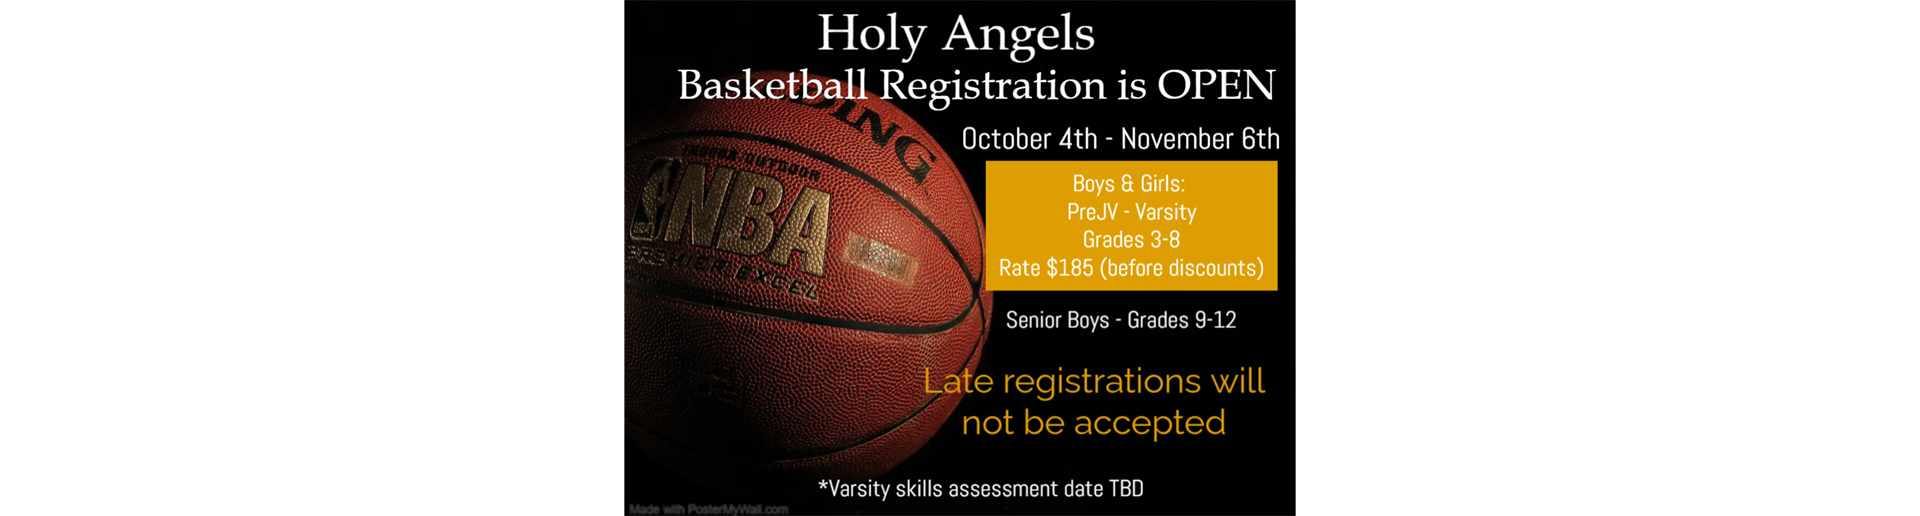 Basketball Registration is OPEN